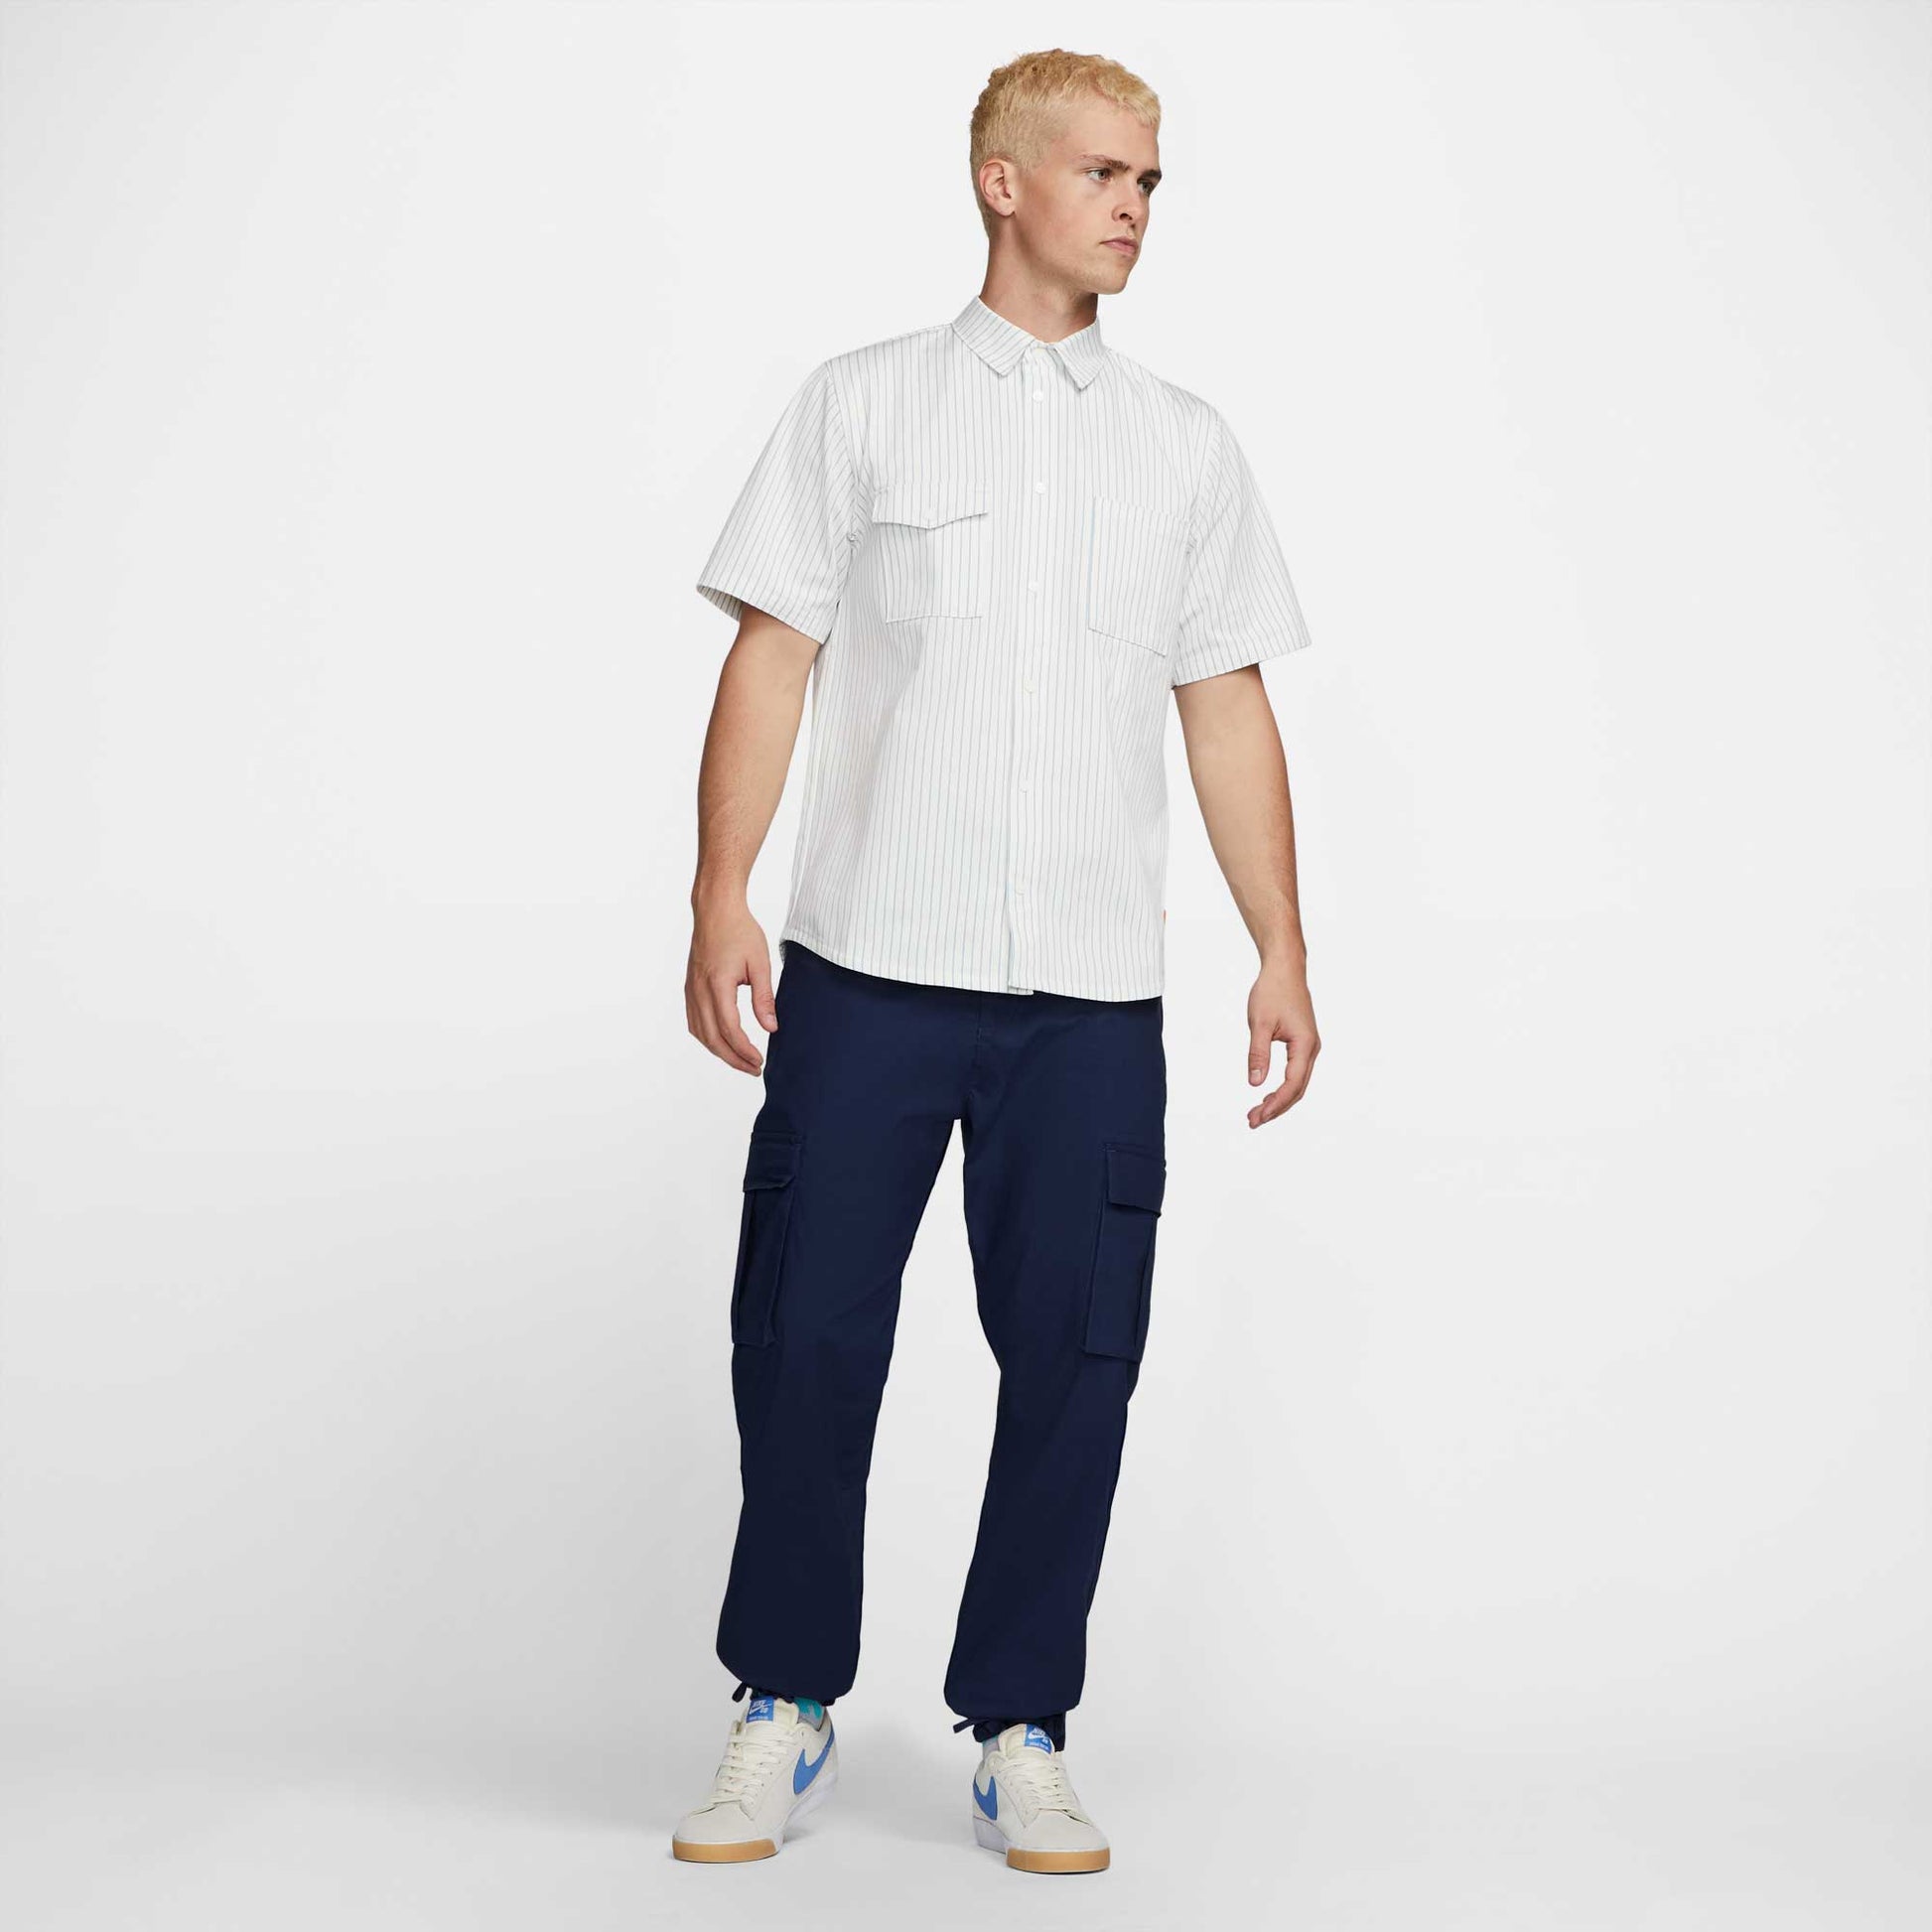 Nike SB Dri-Fit Woven Shirt, sail - Tiki Room Skateboards - 3